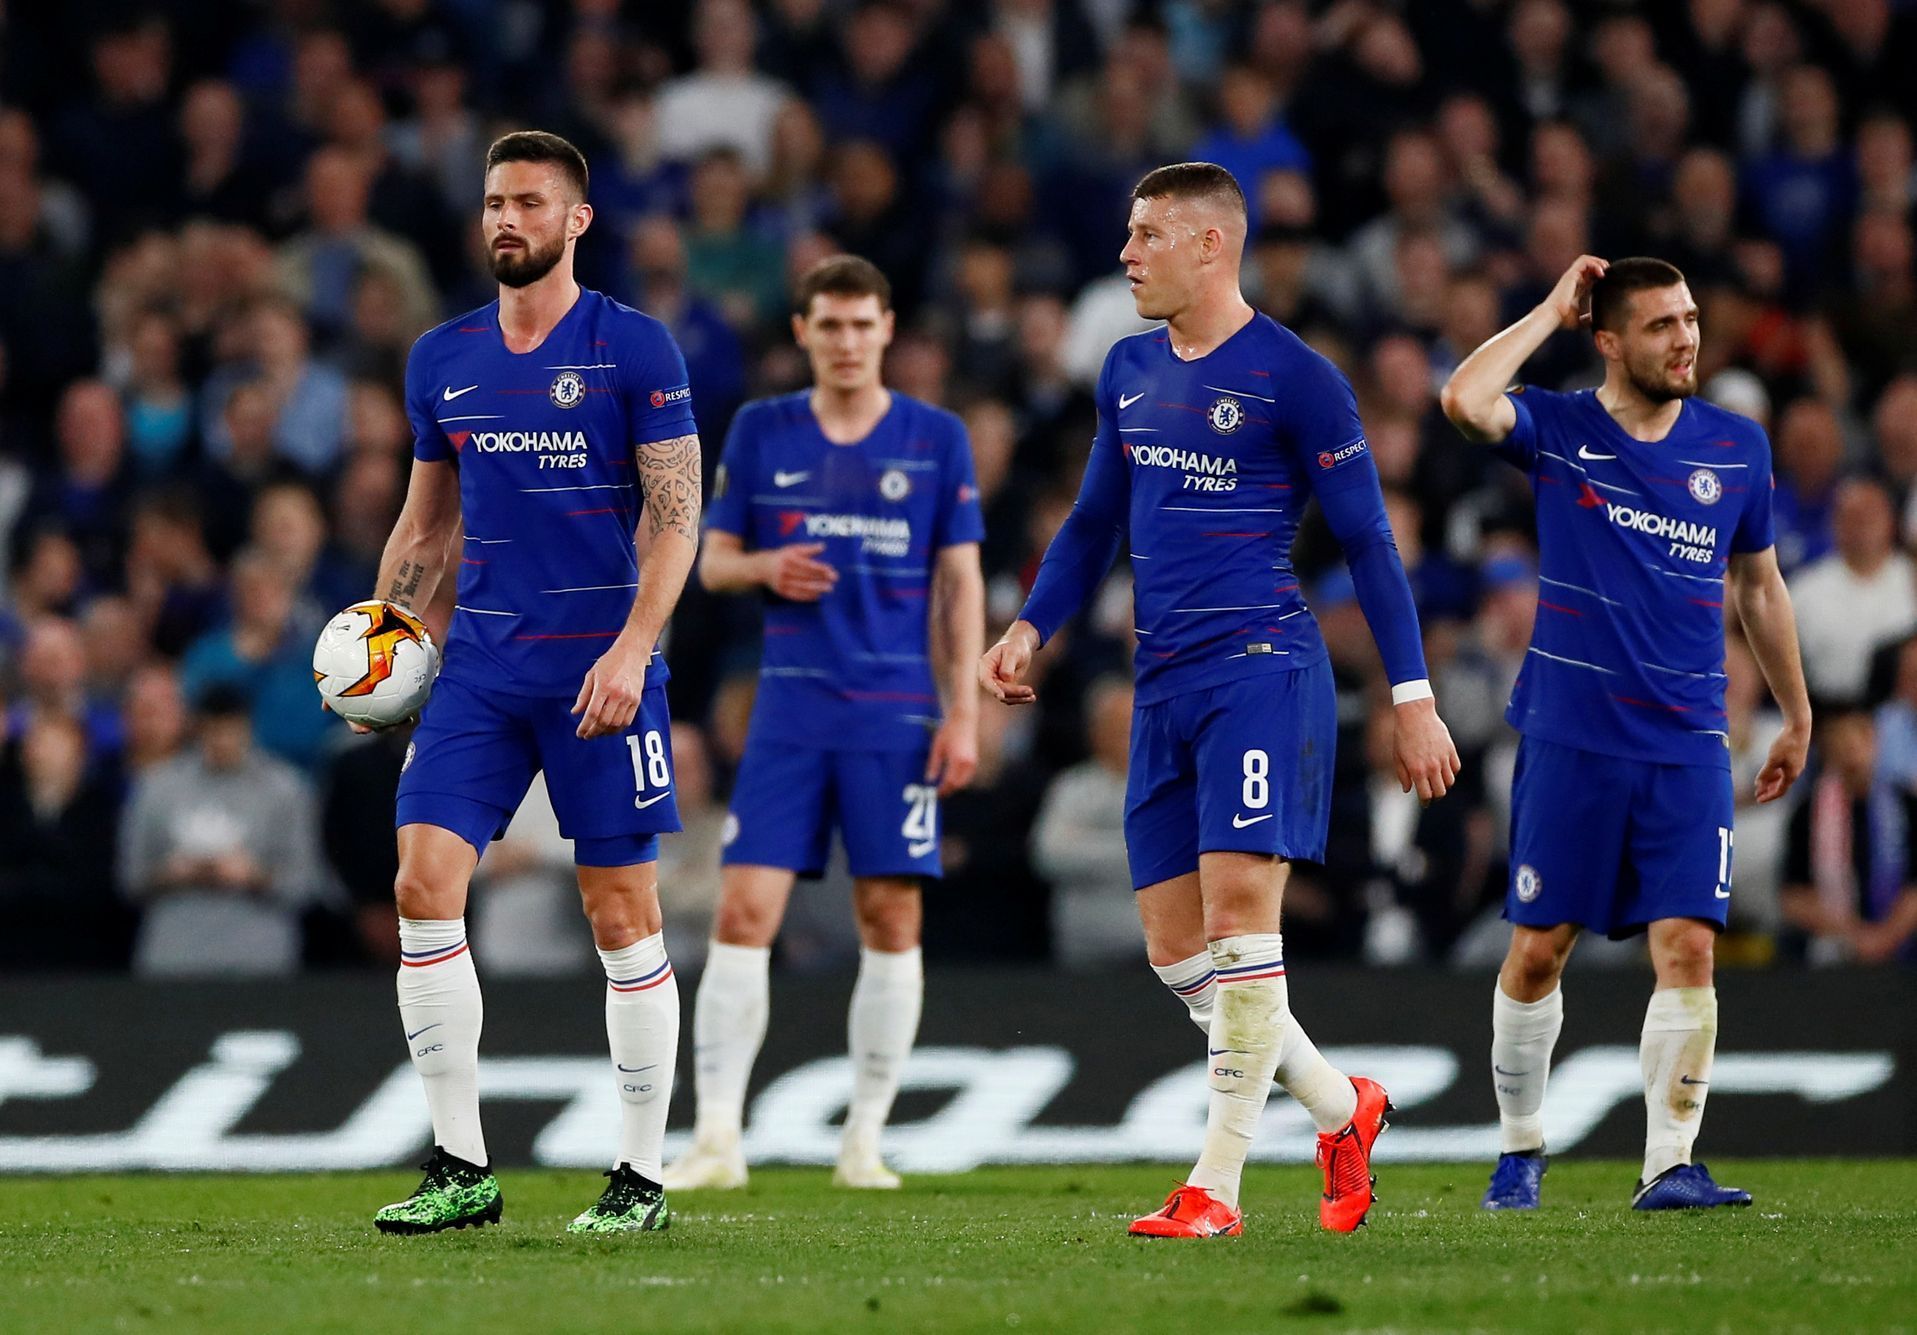 fotbal, odveta čtvrtfinále Evropské ligy, Chelsea - Slavia, hráči Chelsea po prvním inkasovaném gólu